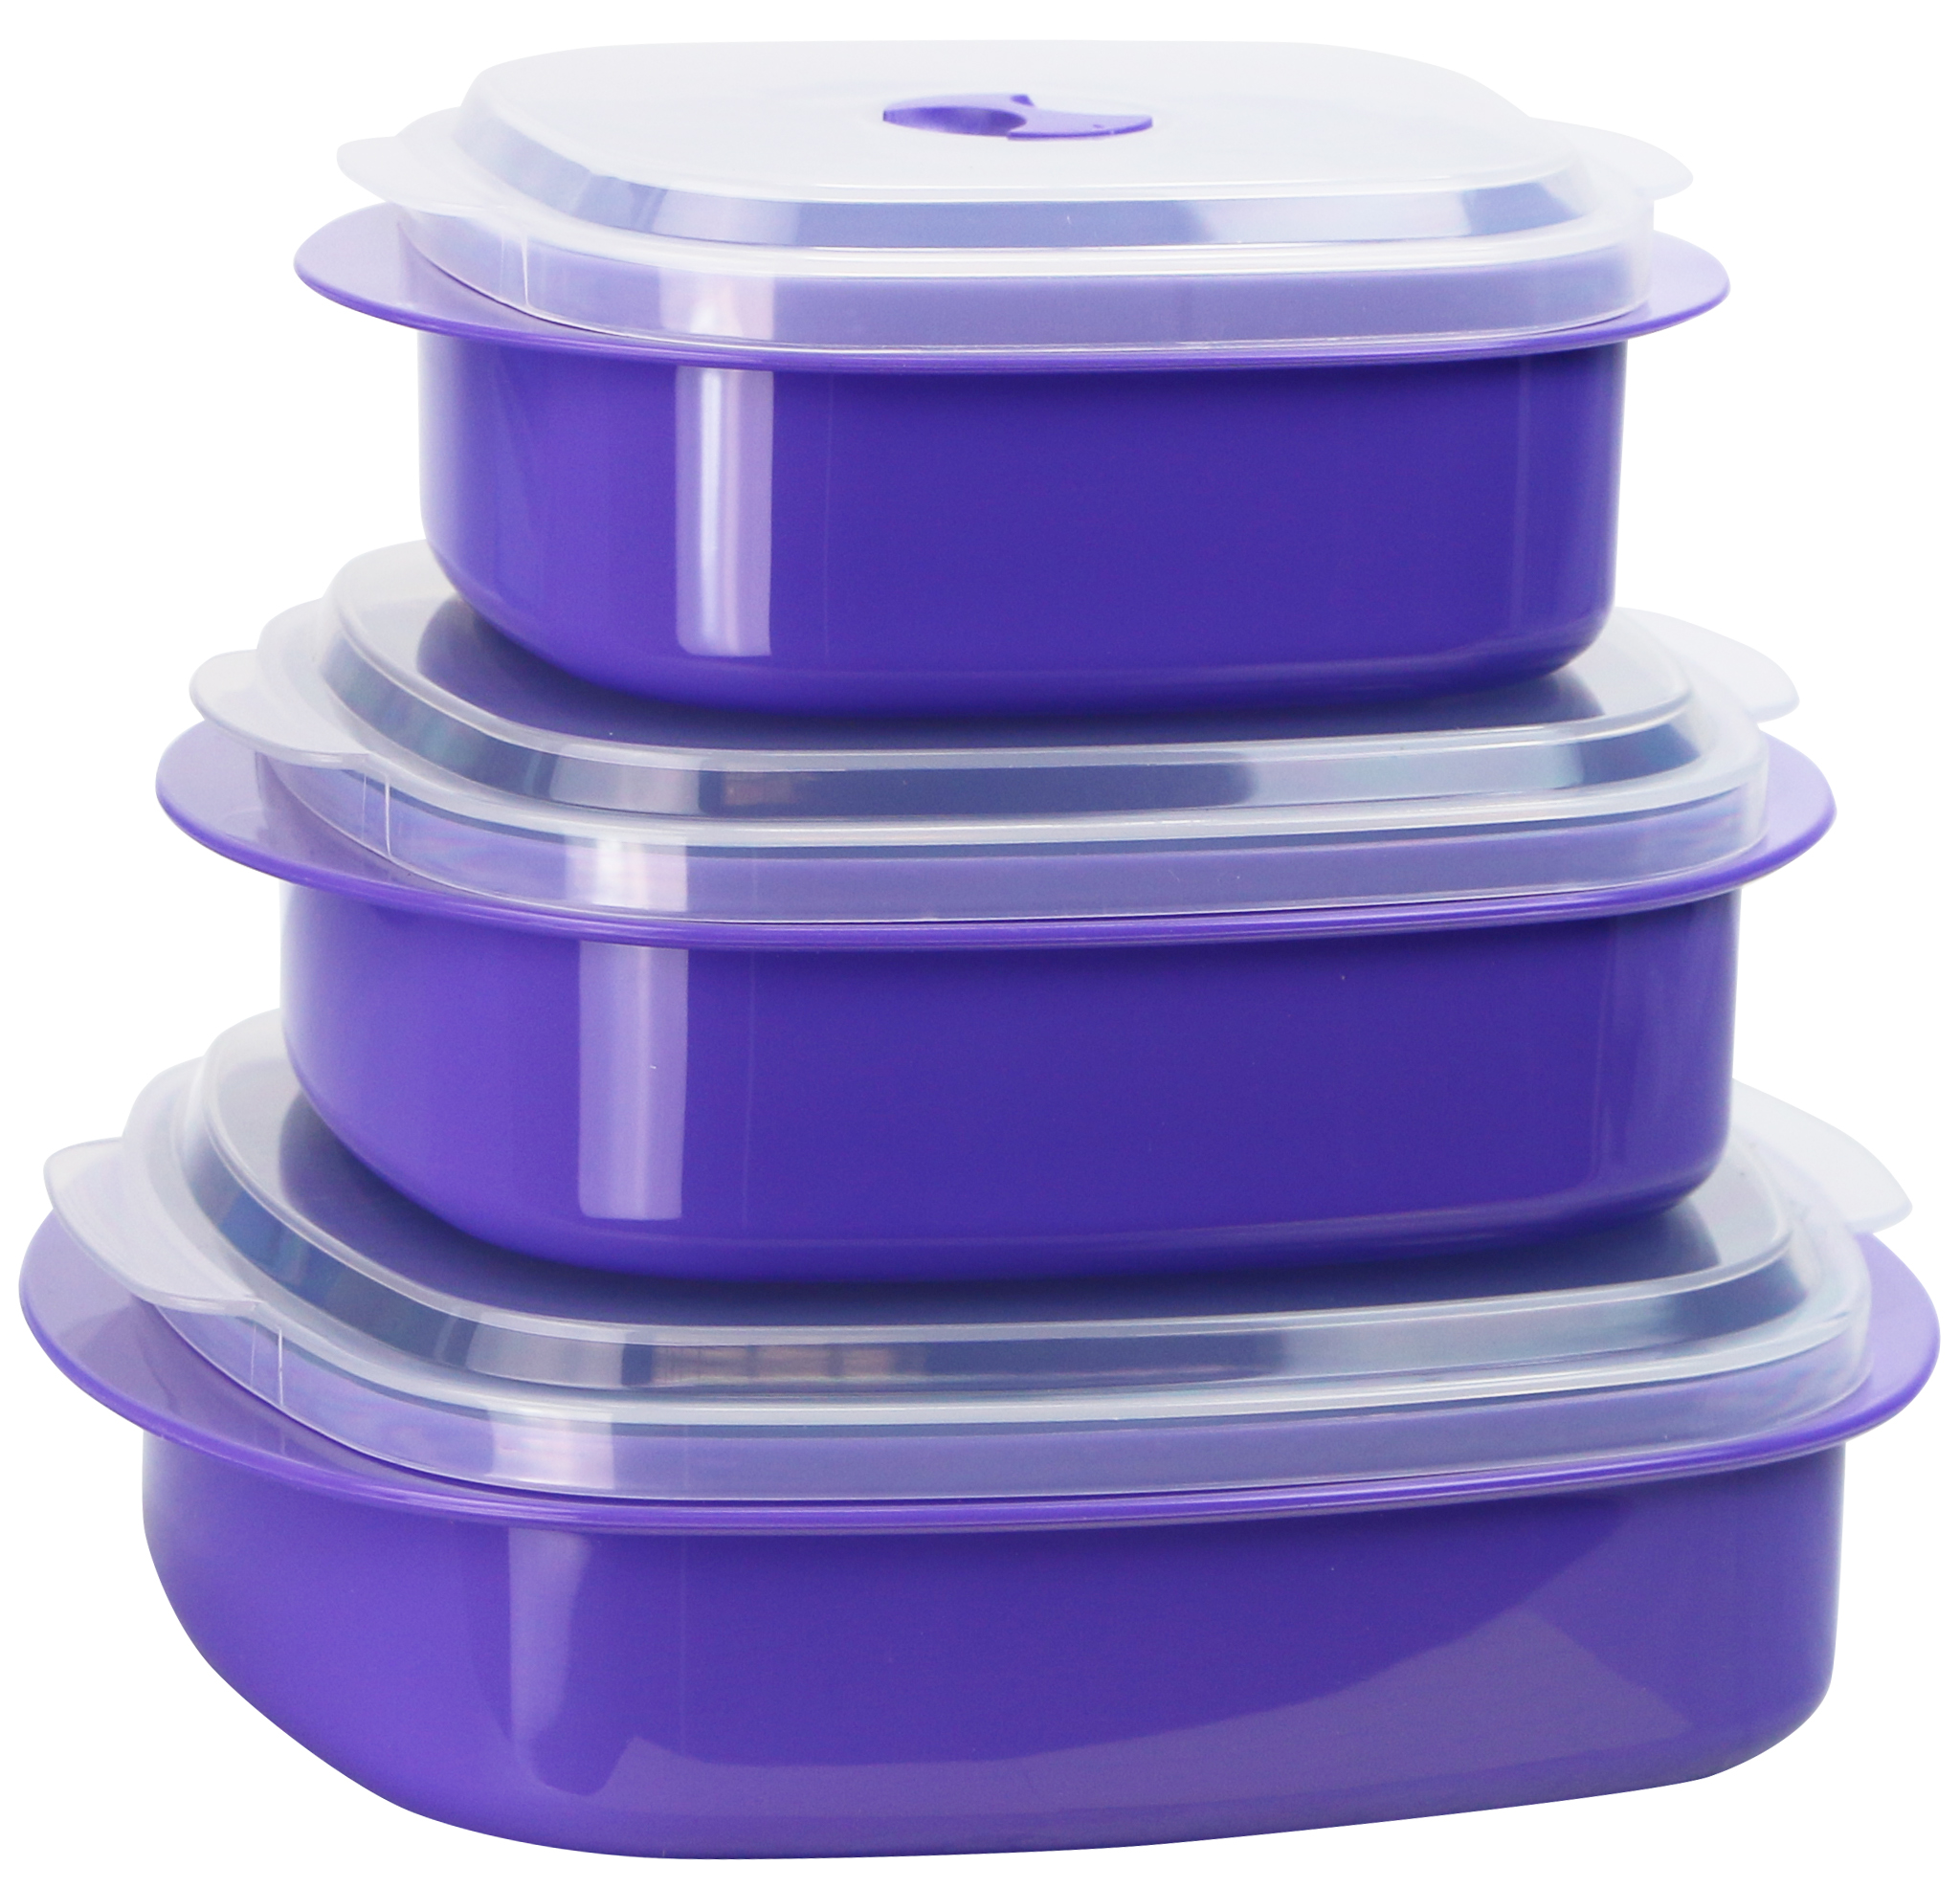 Calypso Basics, Microwave Cookware/ Storage Set, Purple - image 1 of 4